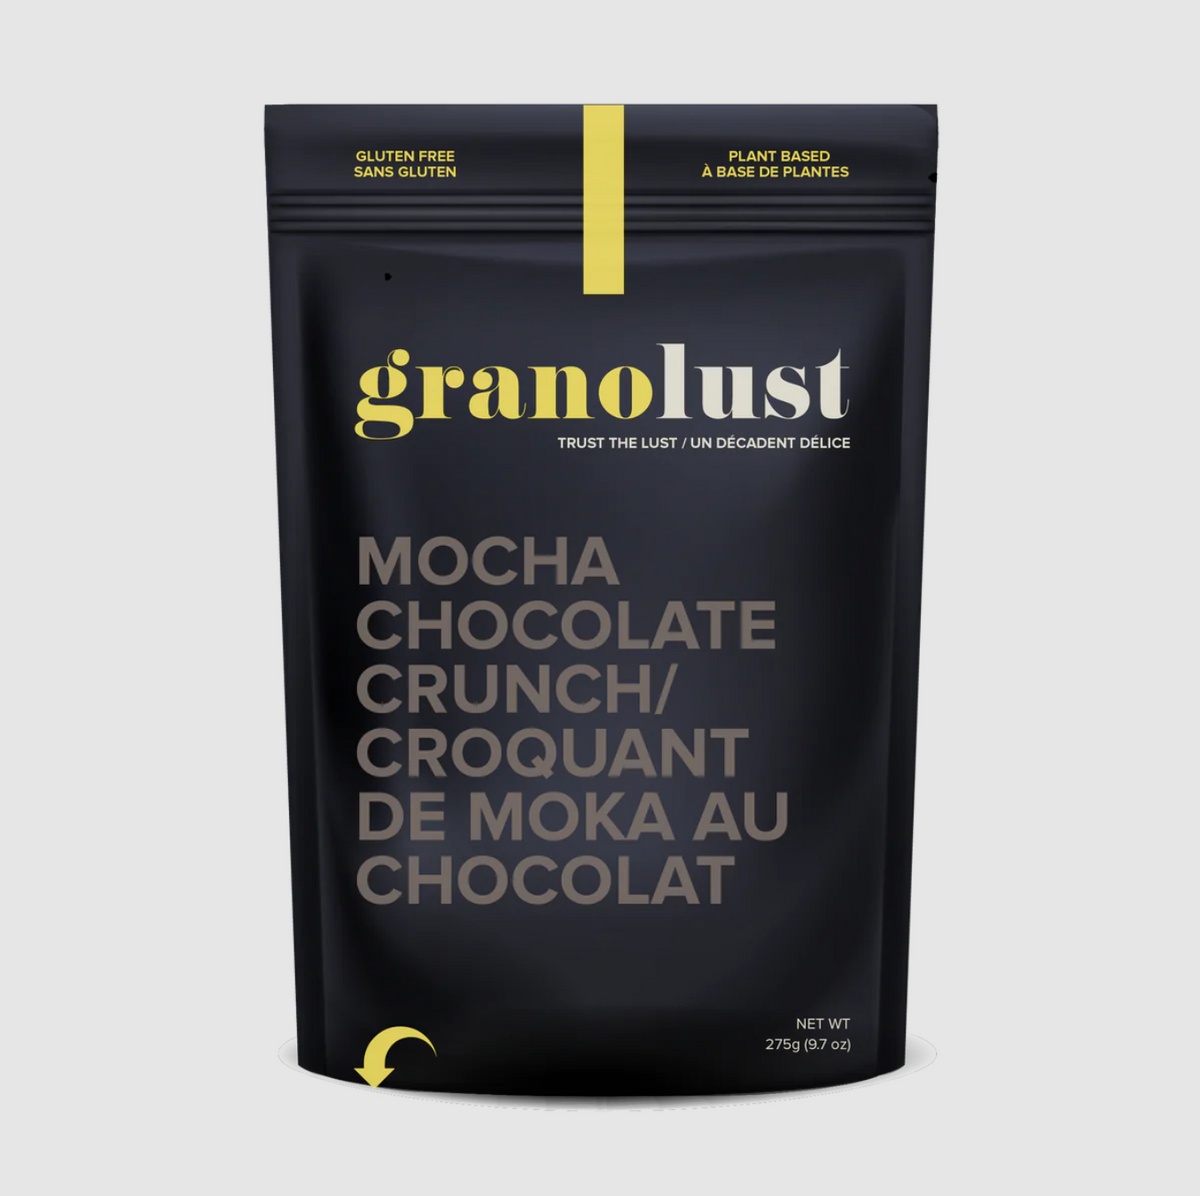 Granola Croquant Moka Au Chocolat